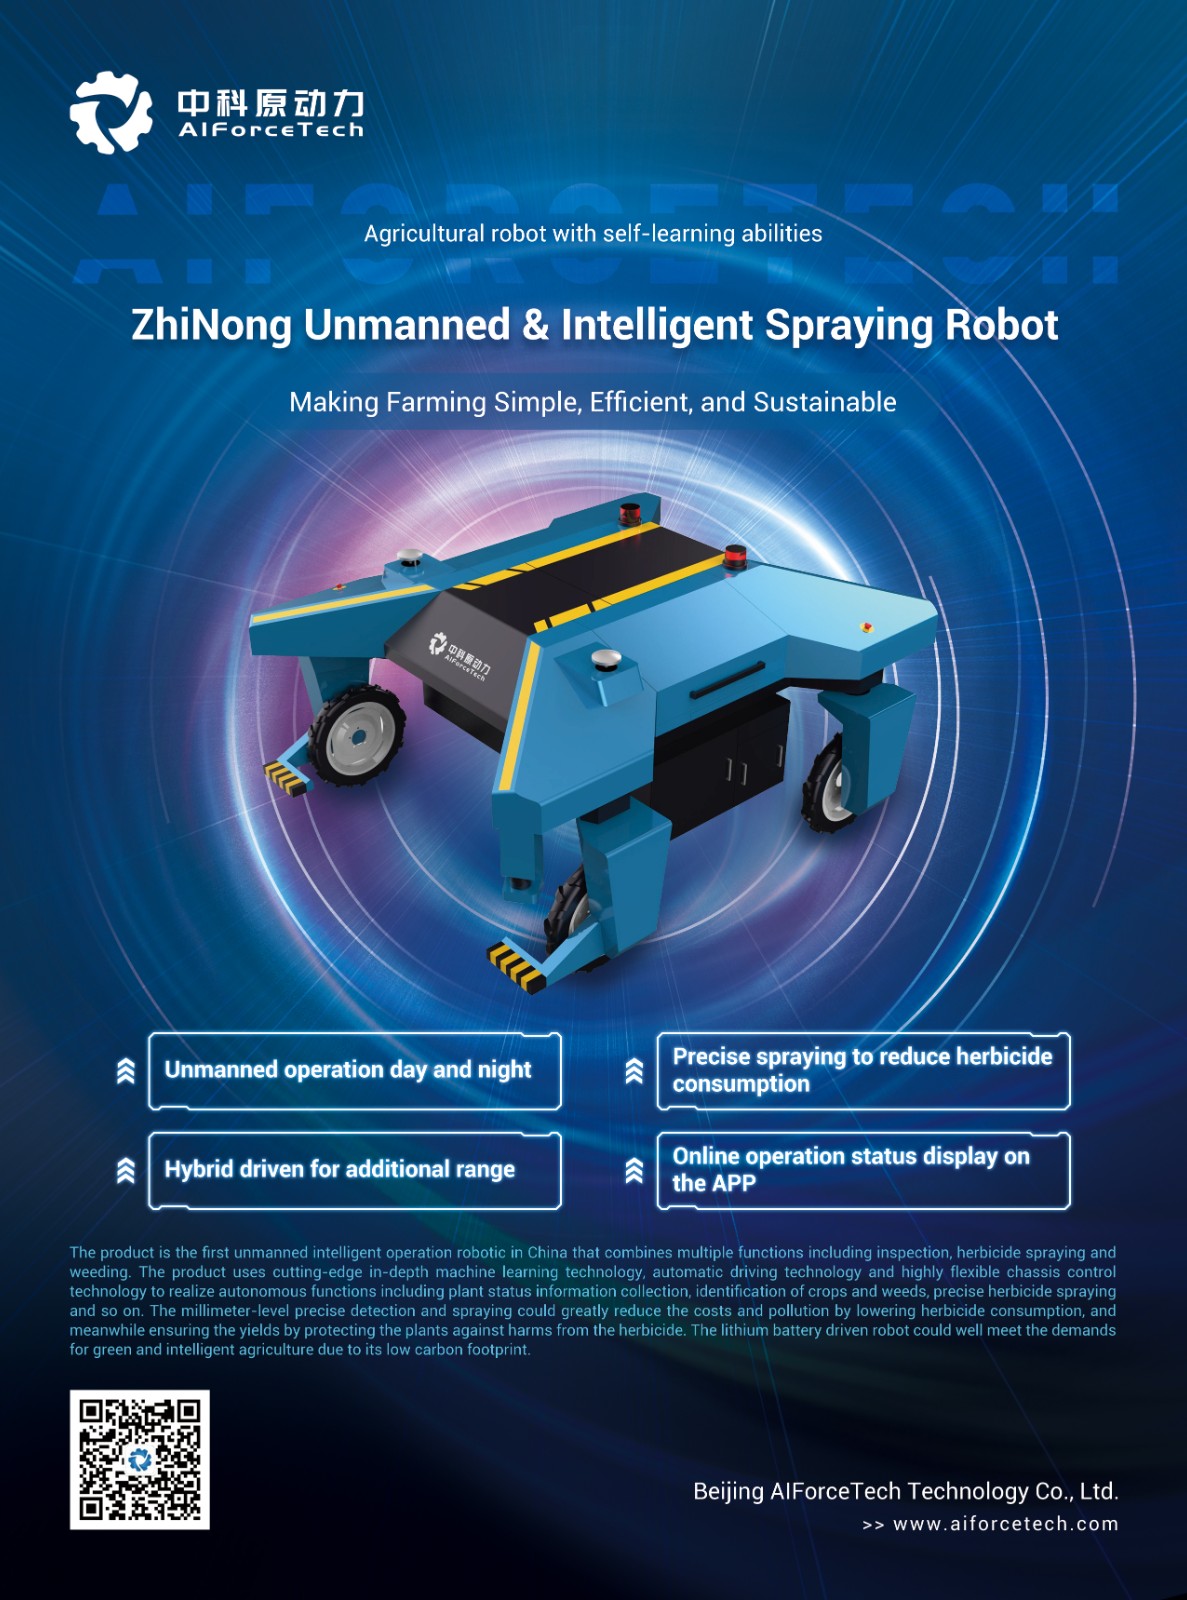 ZhiNong Unmanned & Intelligent Spraying Robot